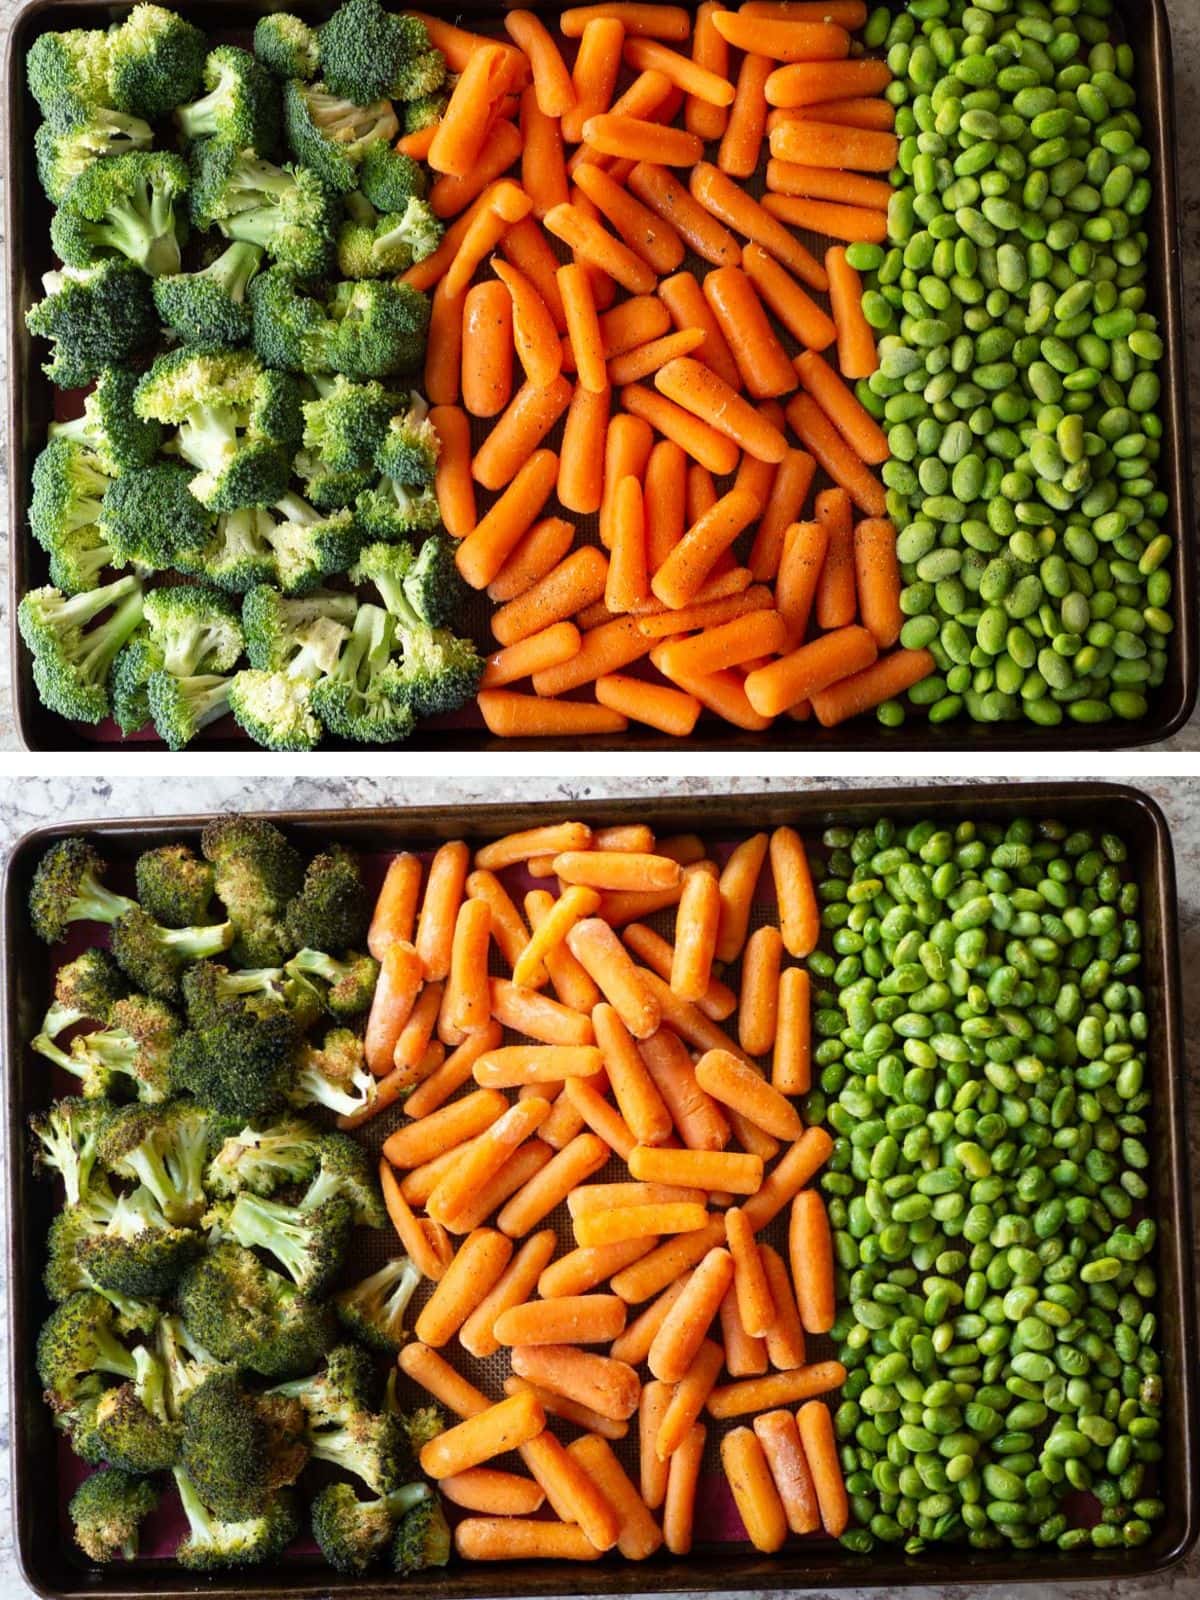 Broccoli, carrots and edamame on a sheet pan.